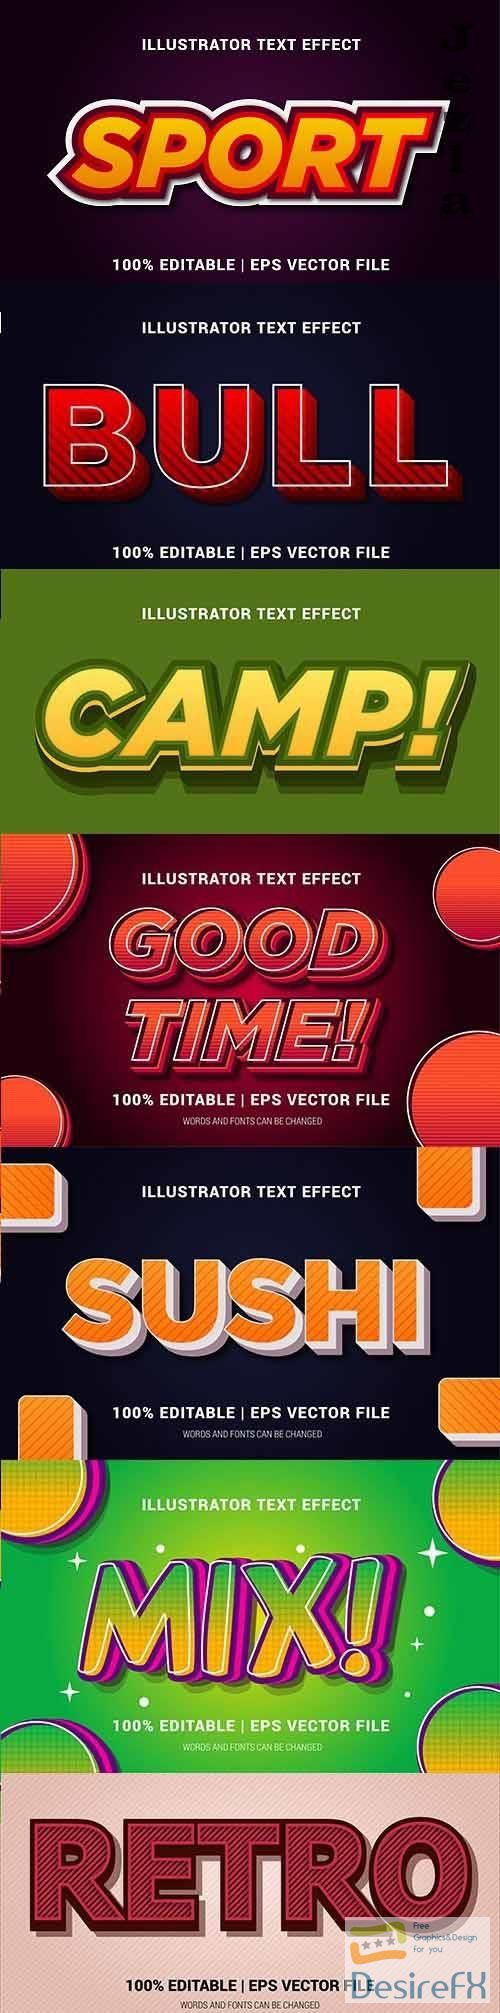 Editable font effect text collection illustration design 129